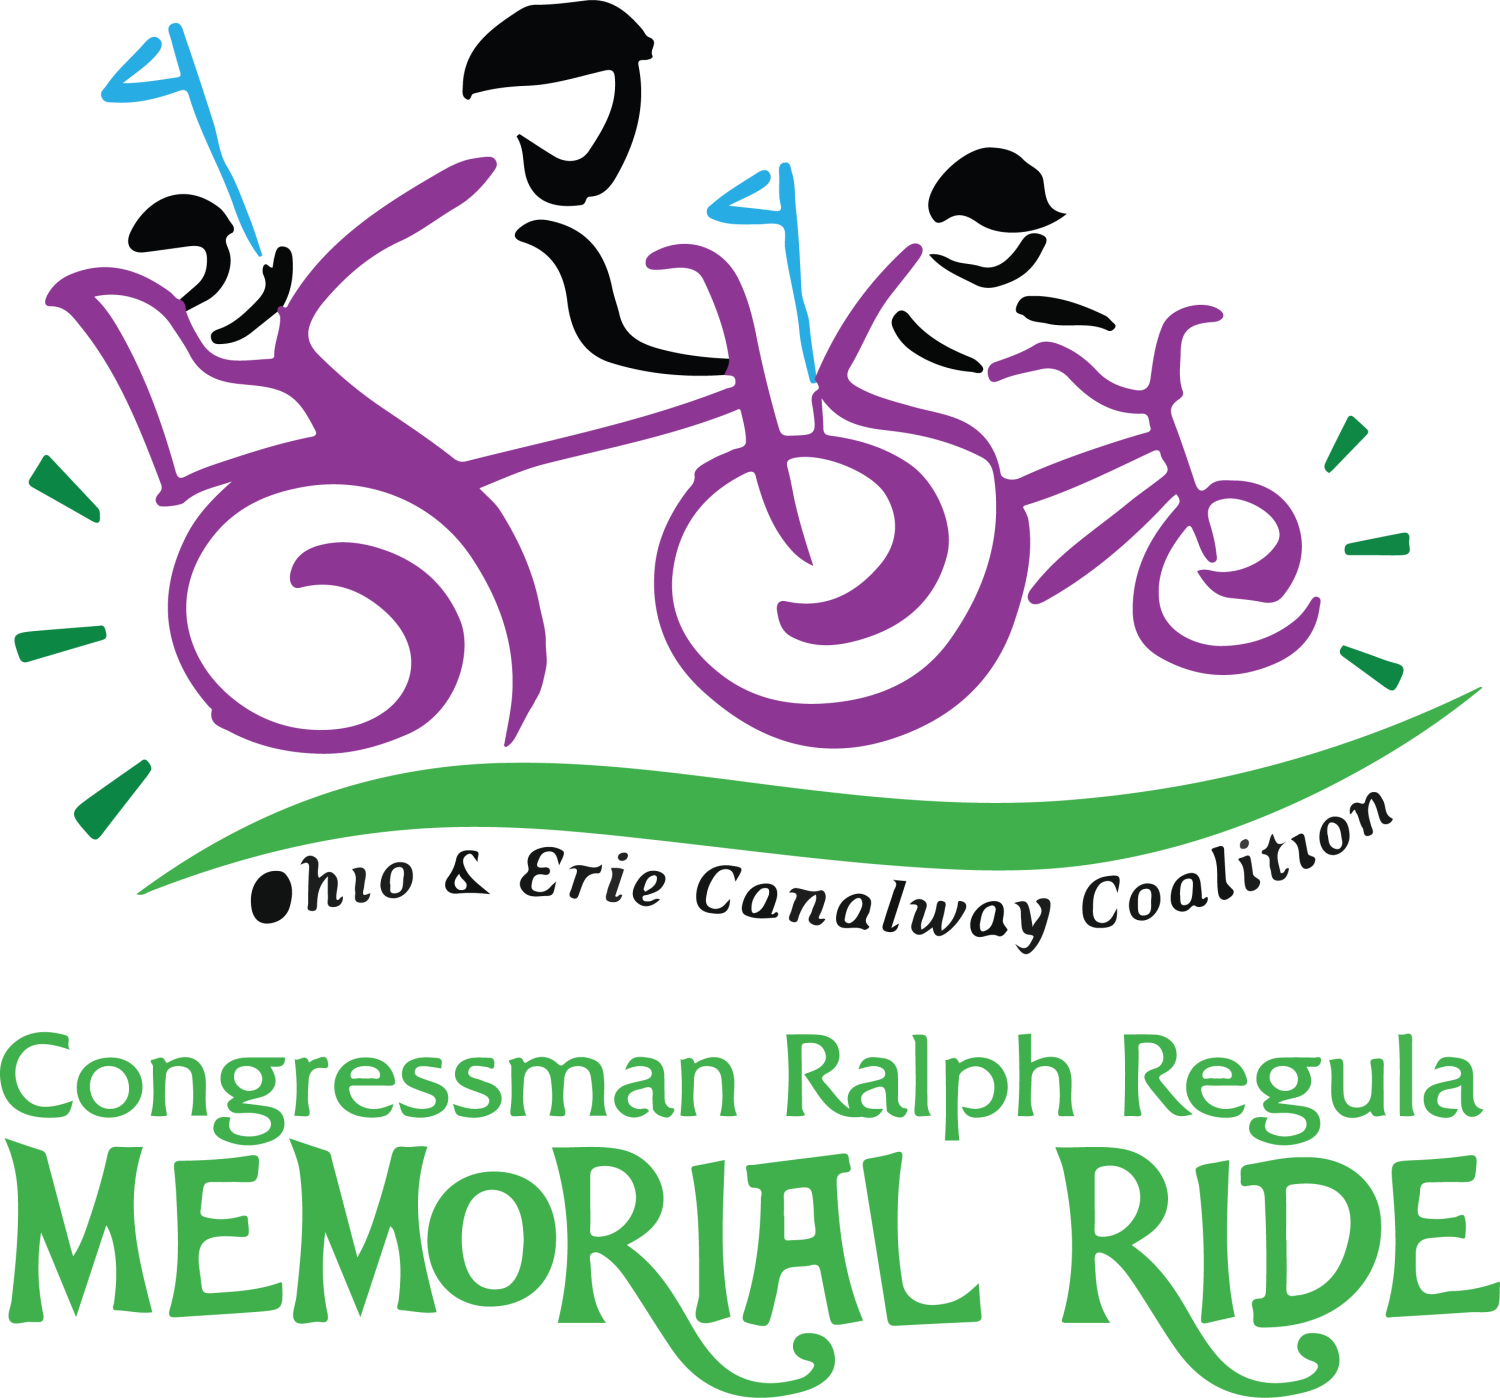 regula ride logo